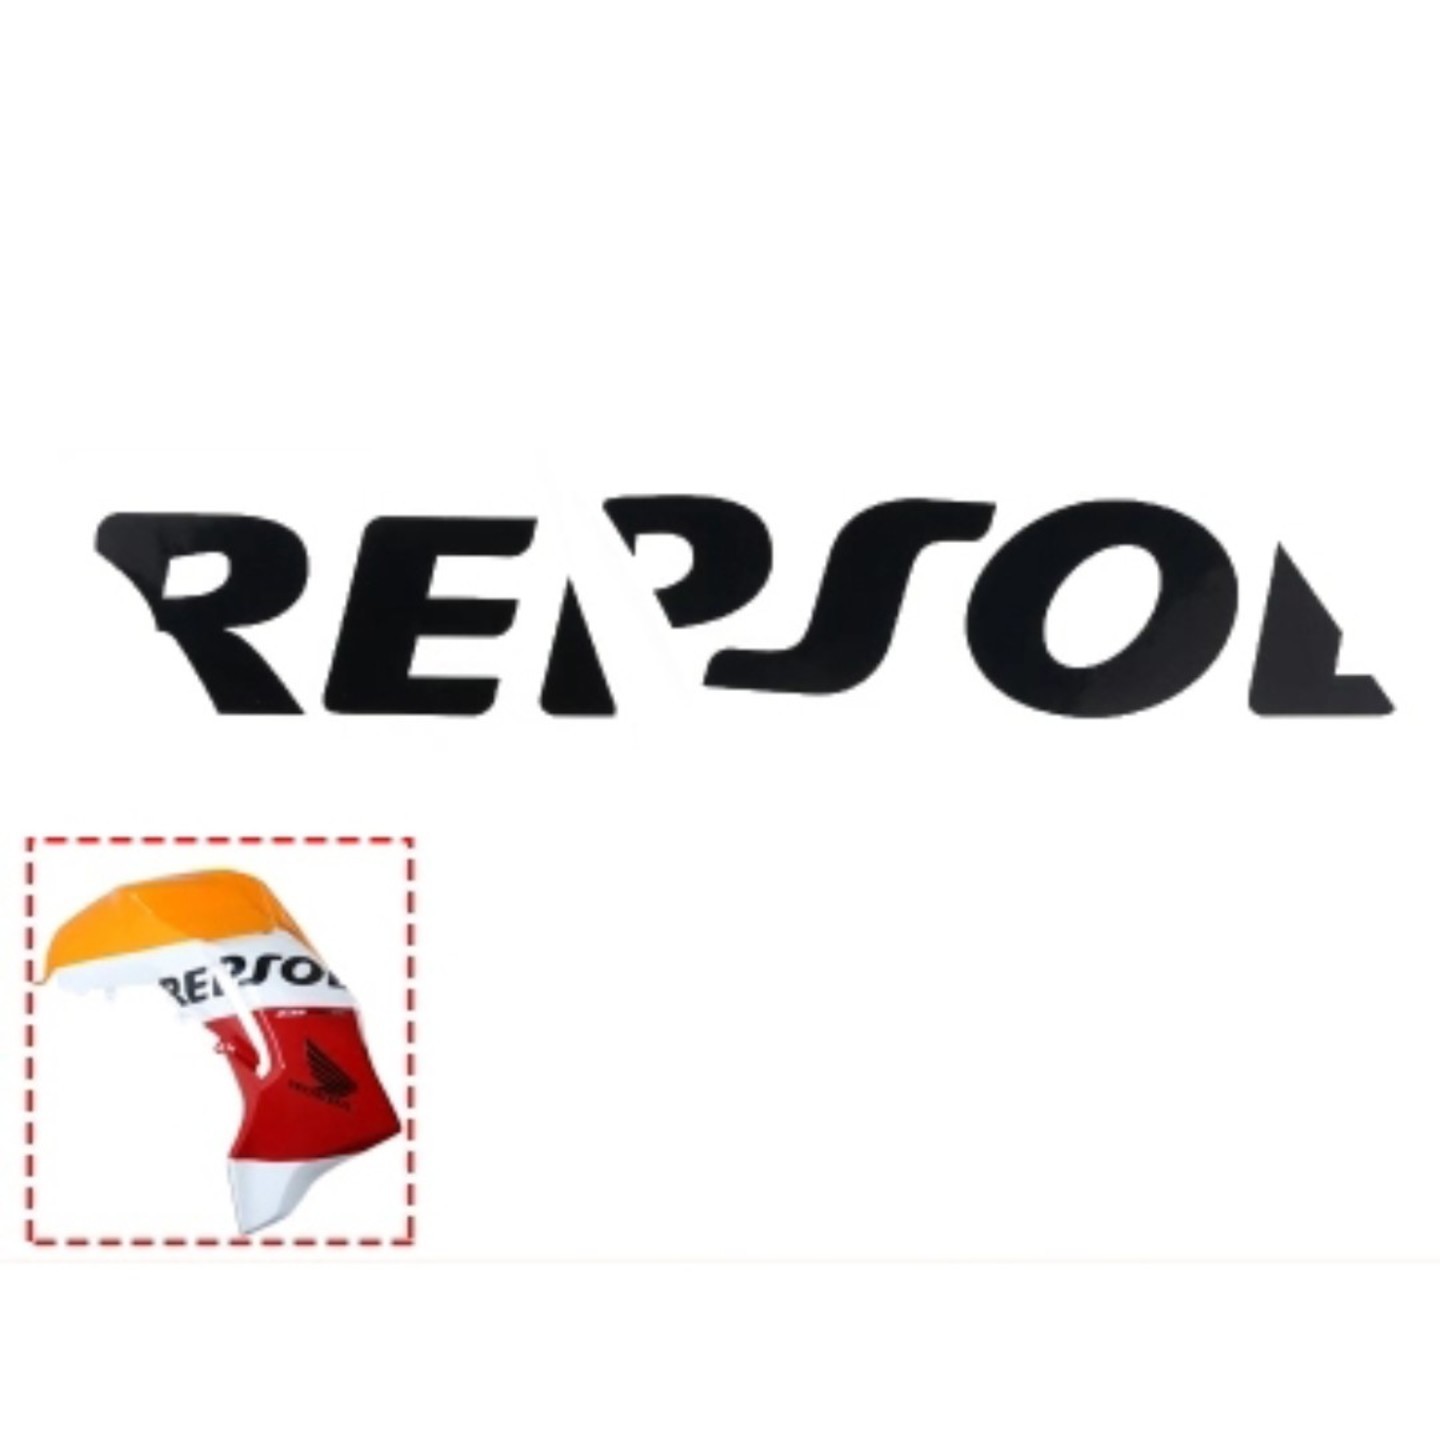 Honda CB190R Repsol tan fairing Sticker